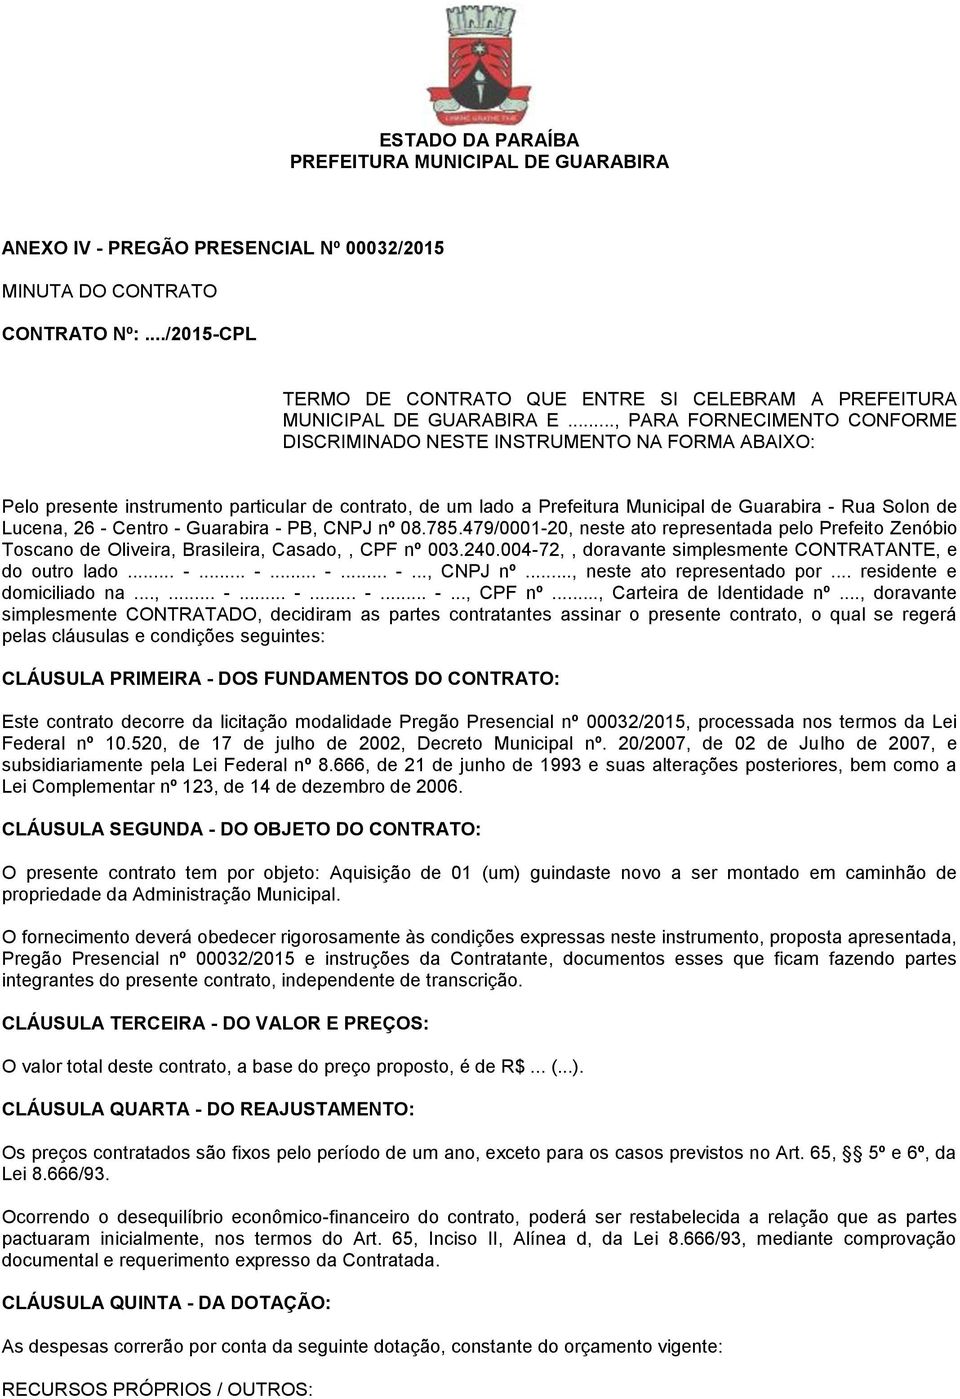 26 - Centro - Guarabira - PB, CNPJ nº 08.785.479/0001-20, neste ato representada pelo Prefeito Zenóbio Toscano de Oliveira, Brasileira, Casado,, CPF nº 003.240.